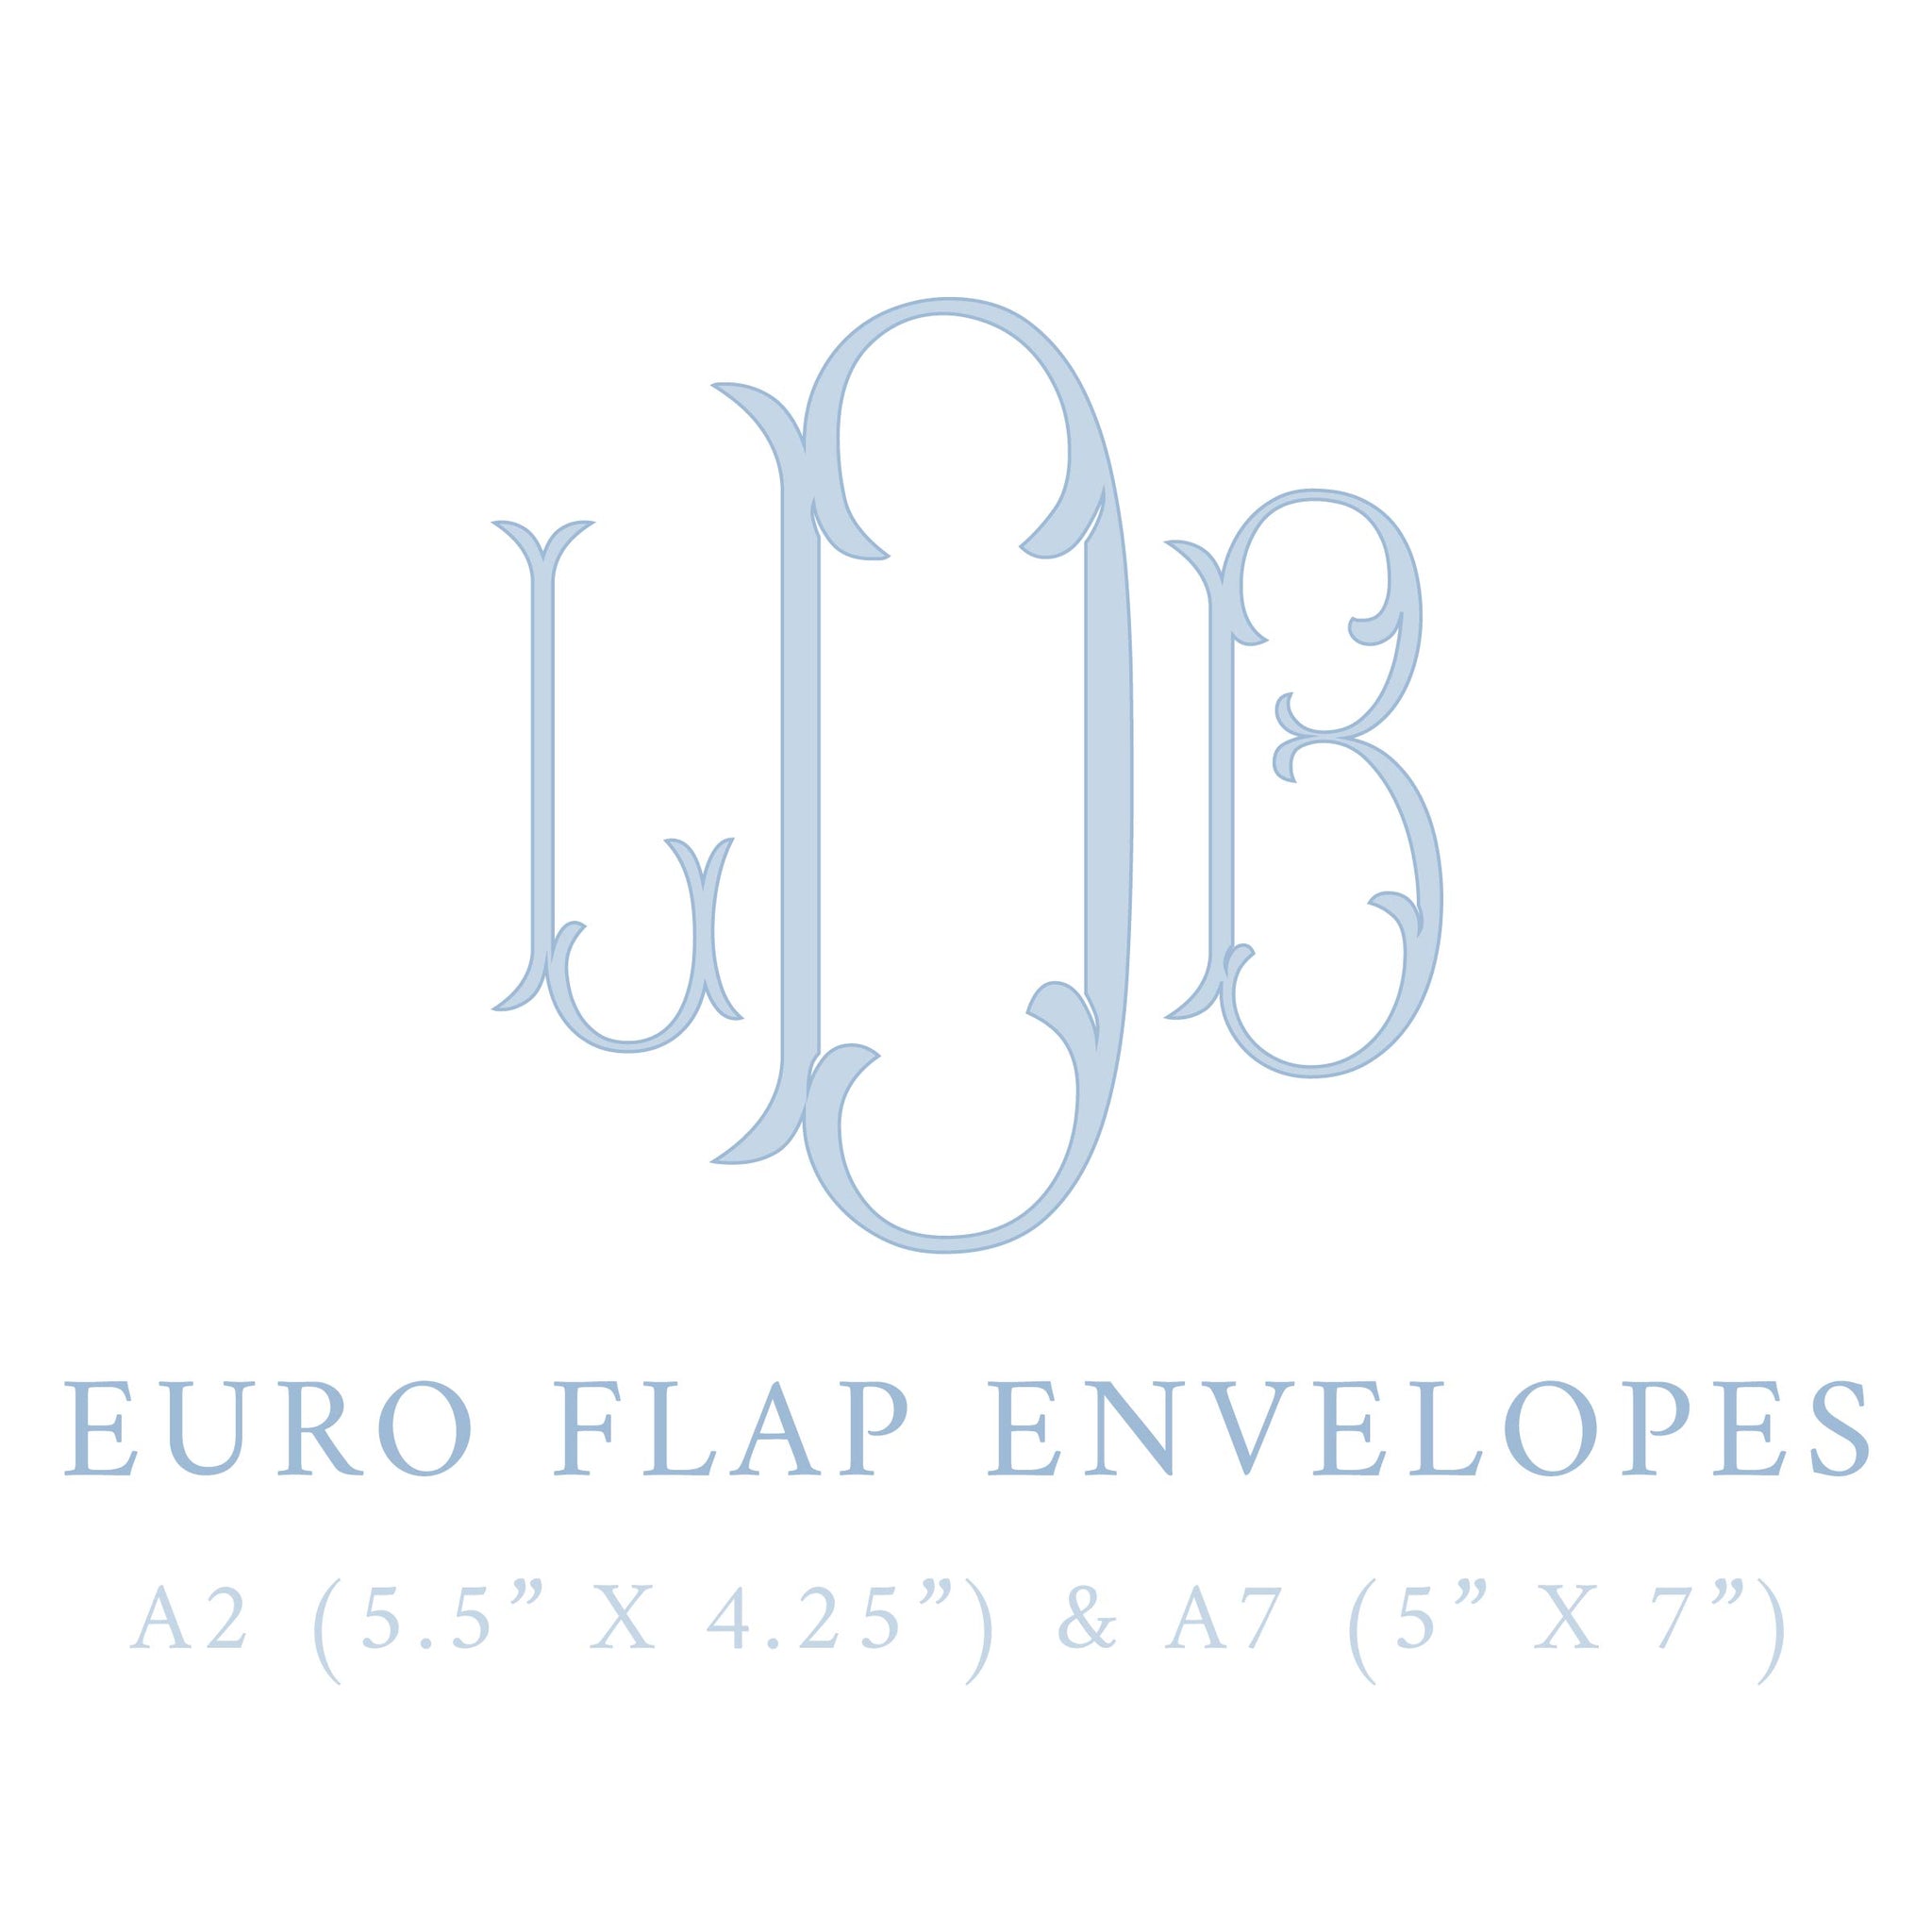 UPGRADE: EURO FLAP ENVELOPES (FITS A2 & A7)